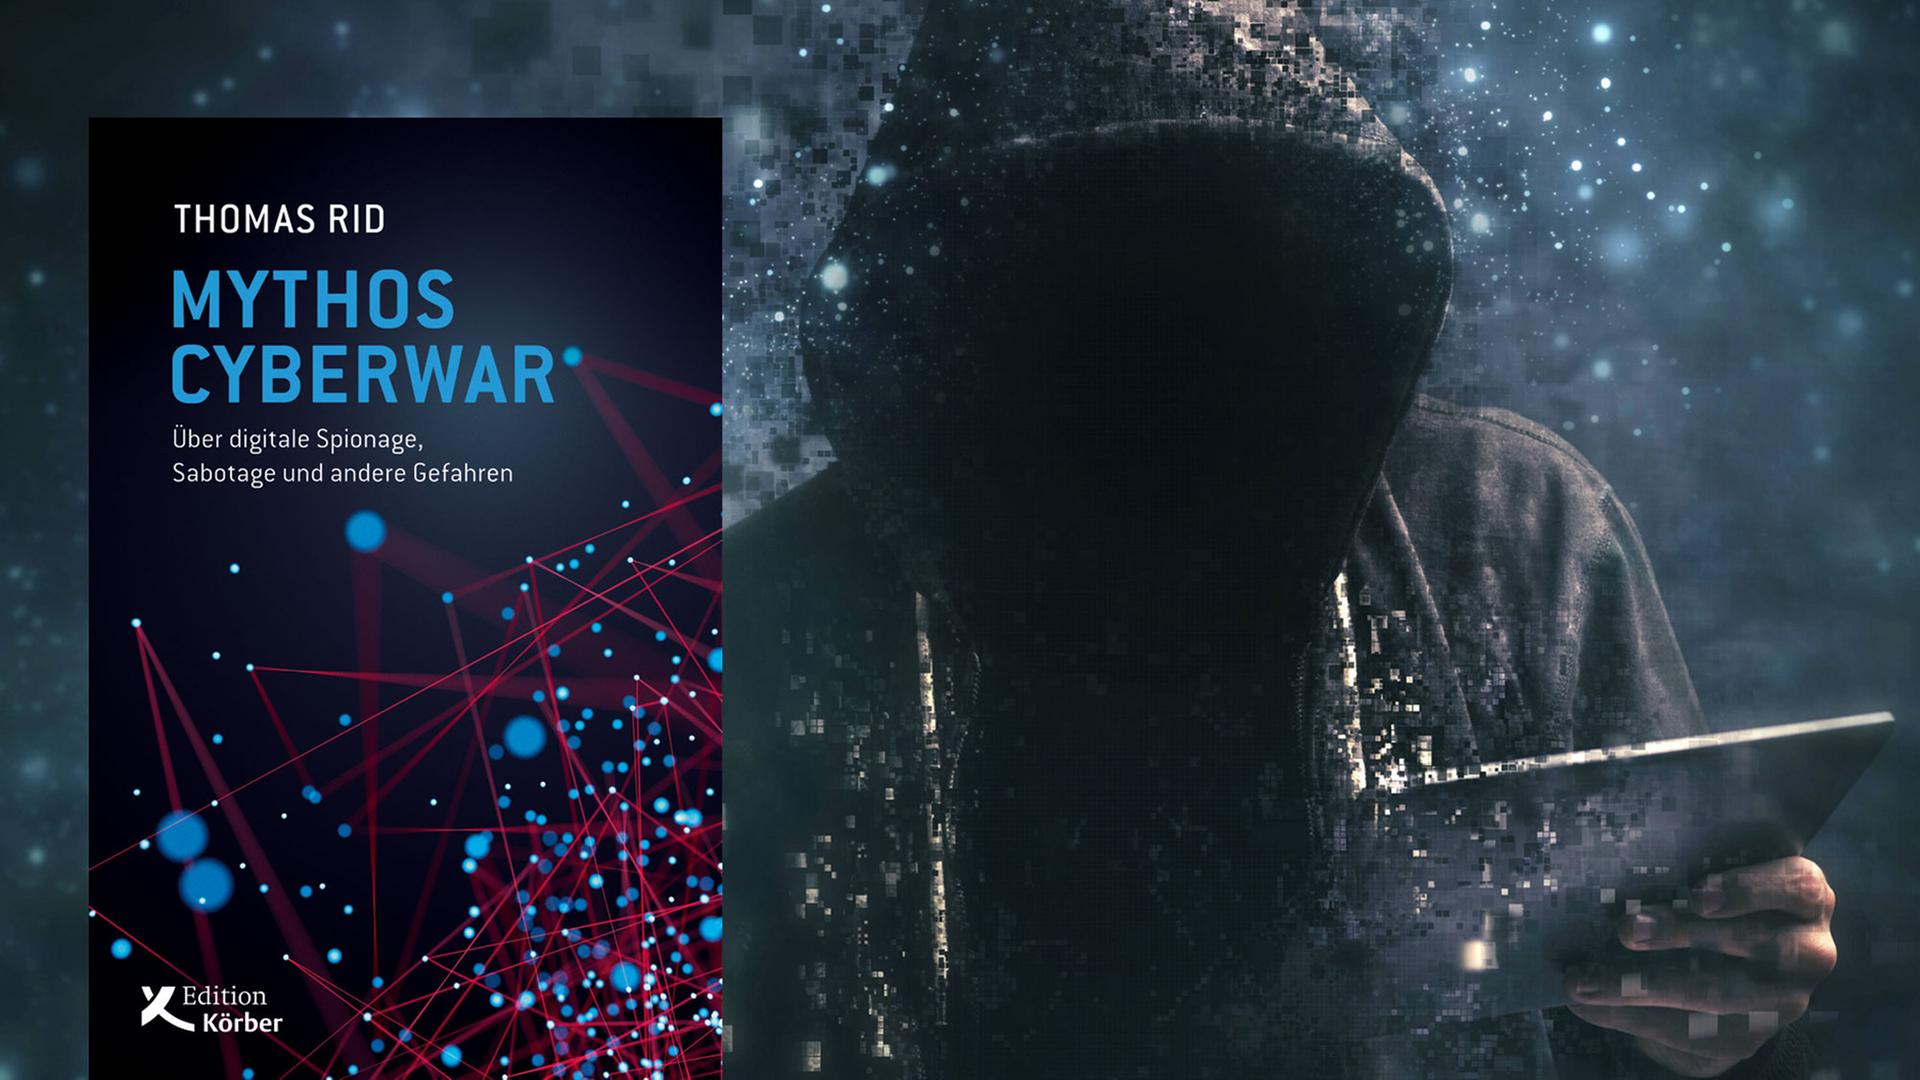 Thomas Rid: "Mythos Cyberwar"